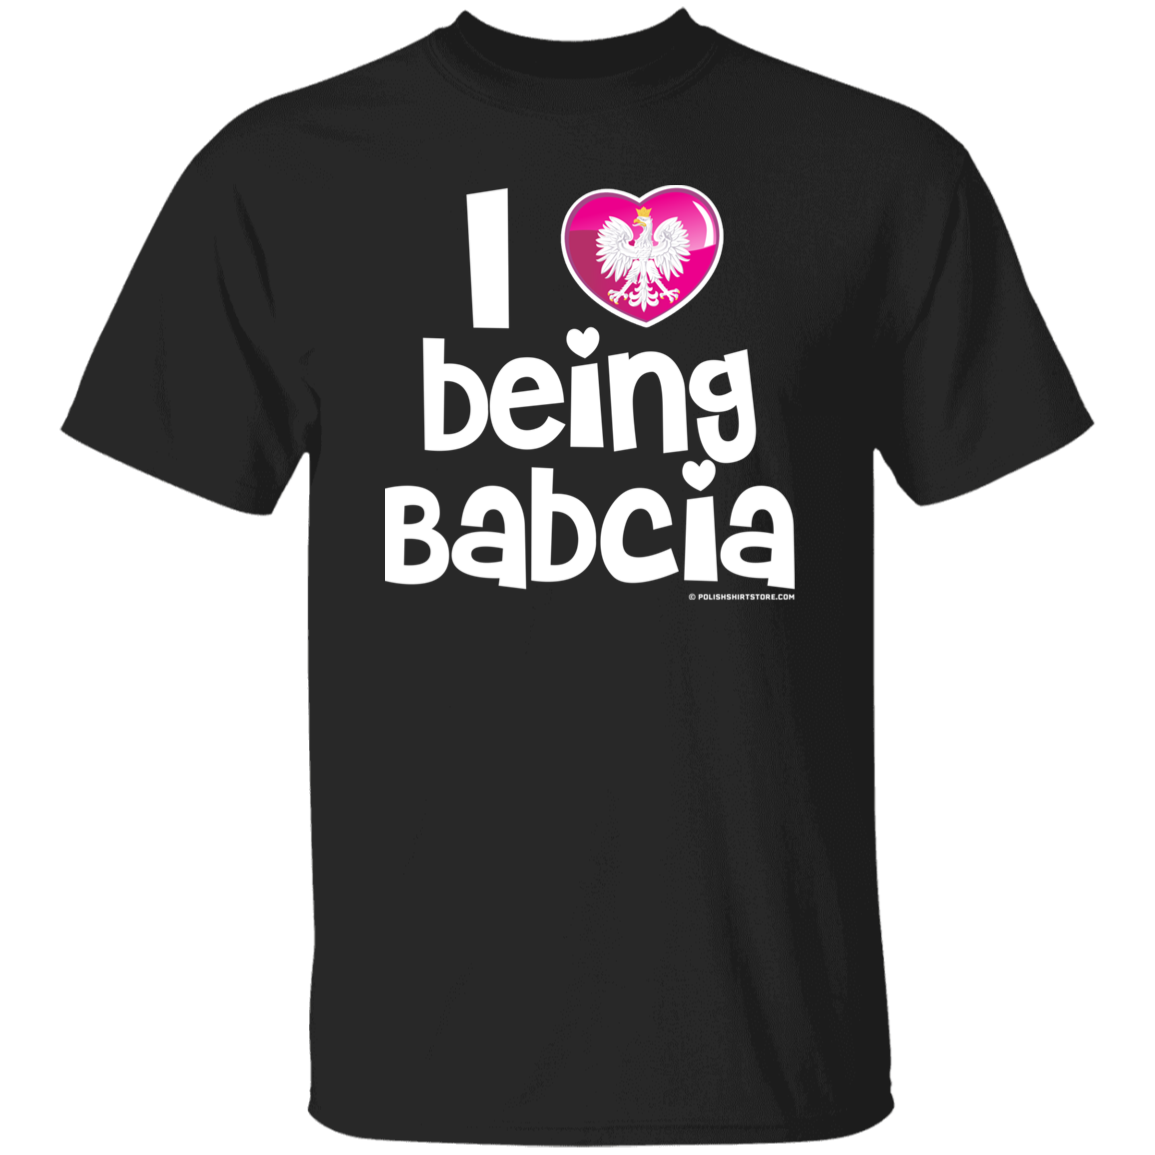 I Love Being Babcia Apparel CustomCat G500 5.3 oz. T-Shirt Black S